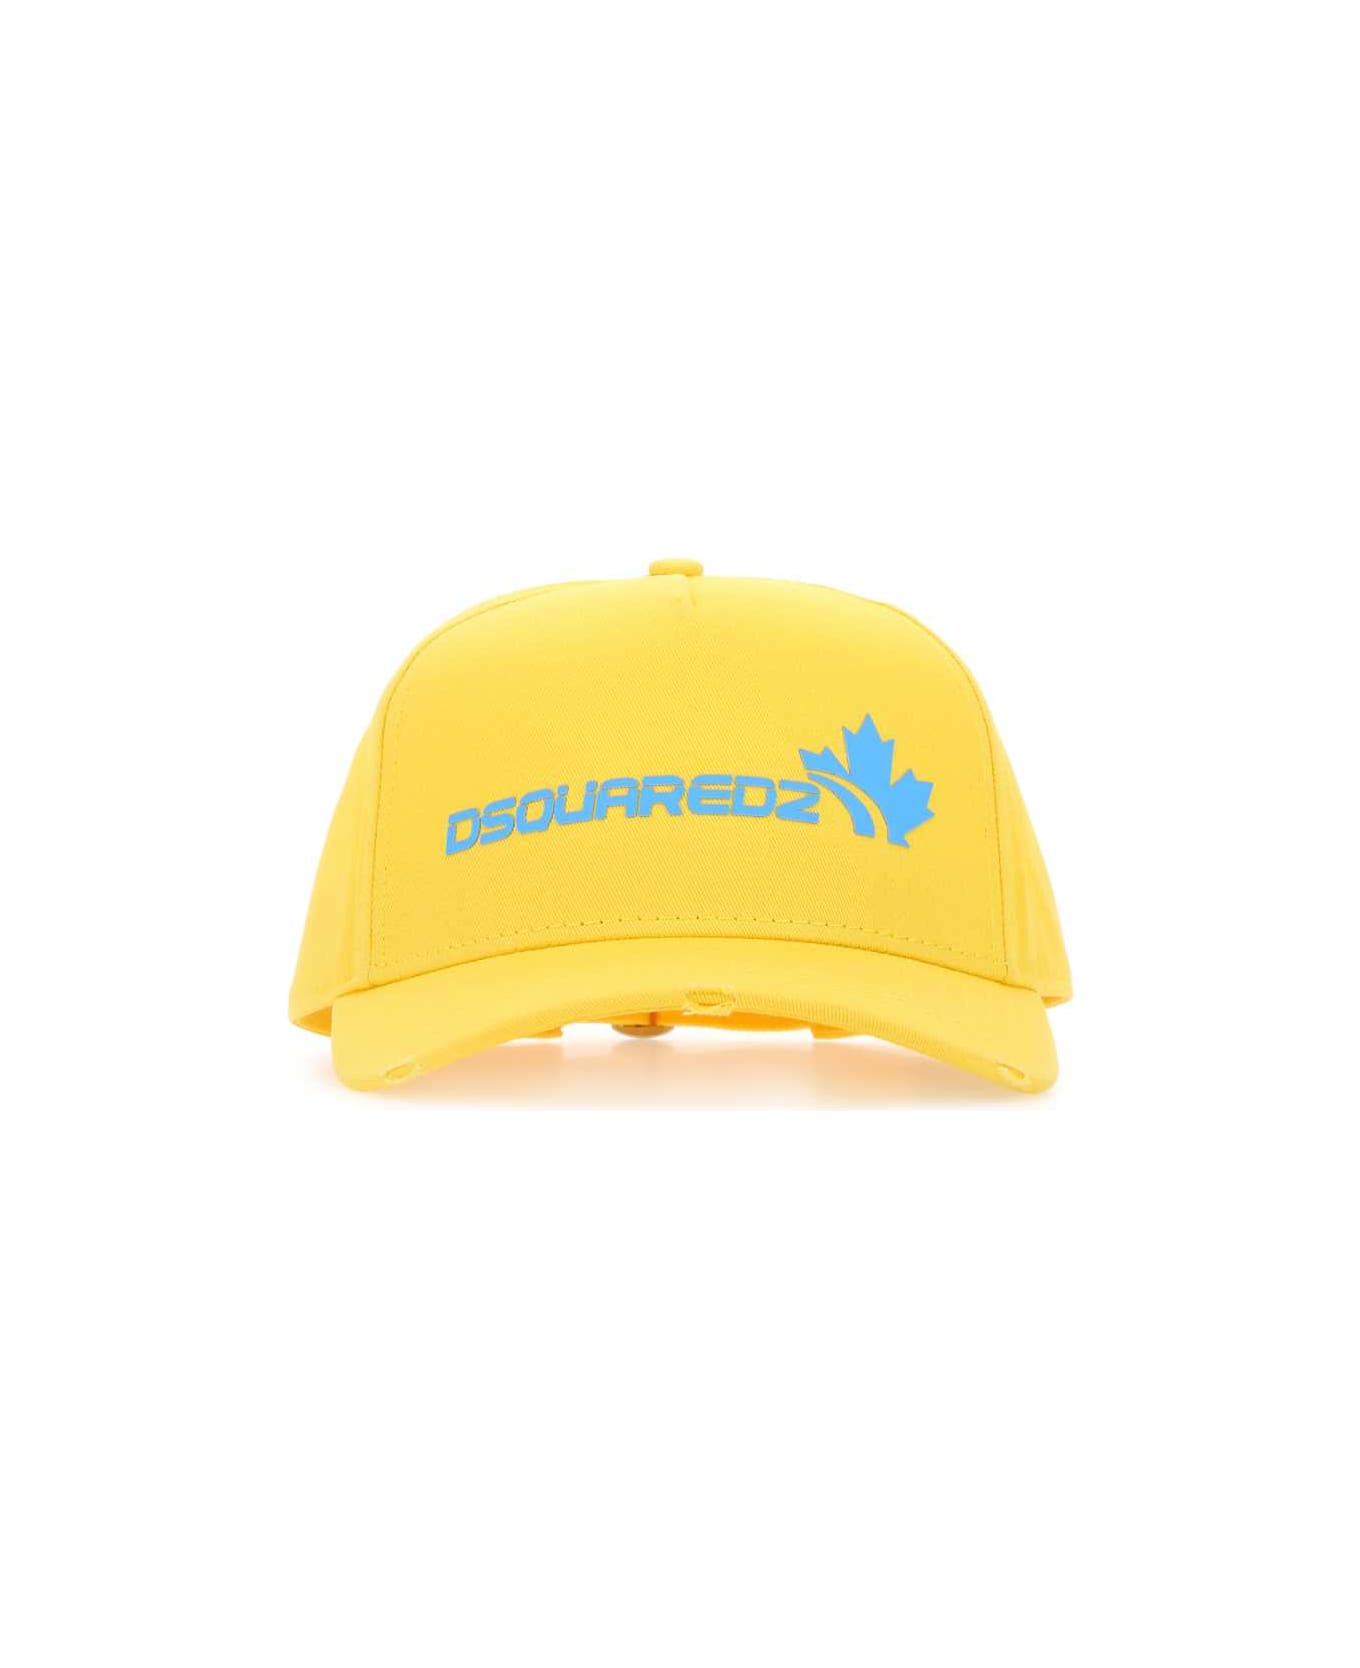 Dsquared2 Yellow Cotton Baseball Cap - YELLOW 帽子